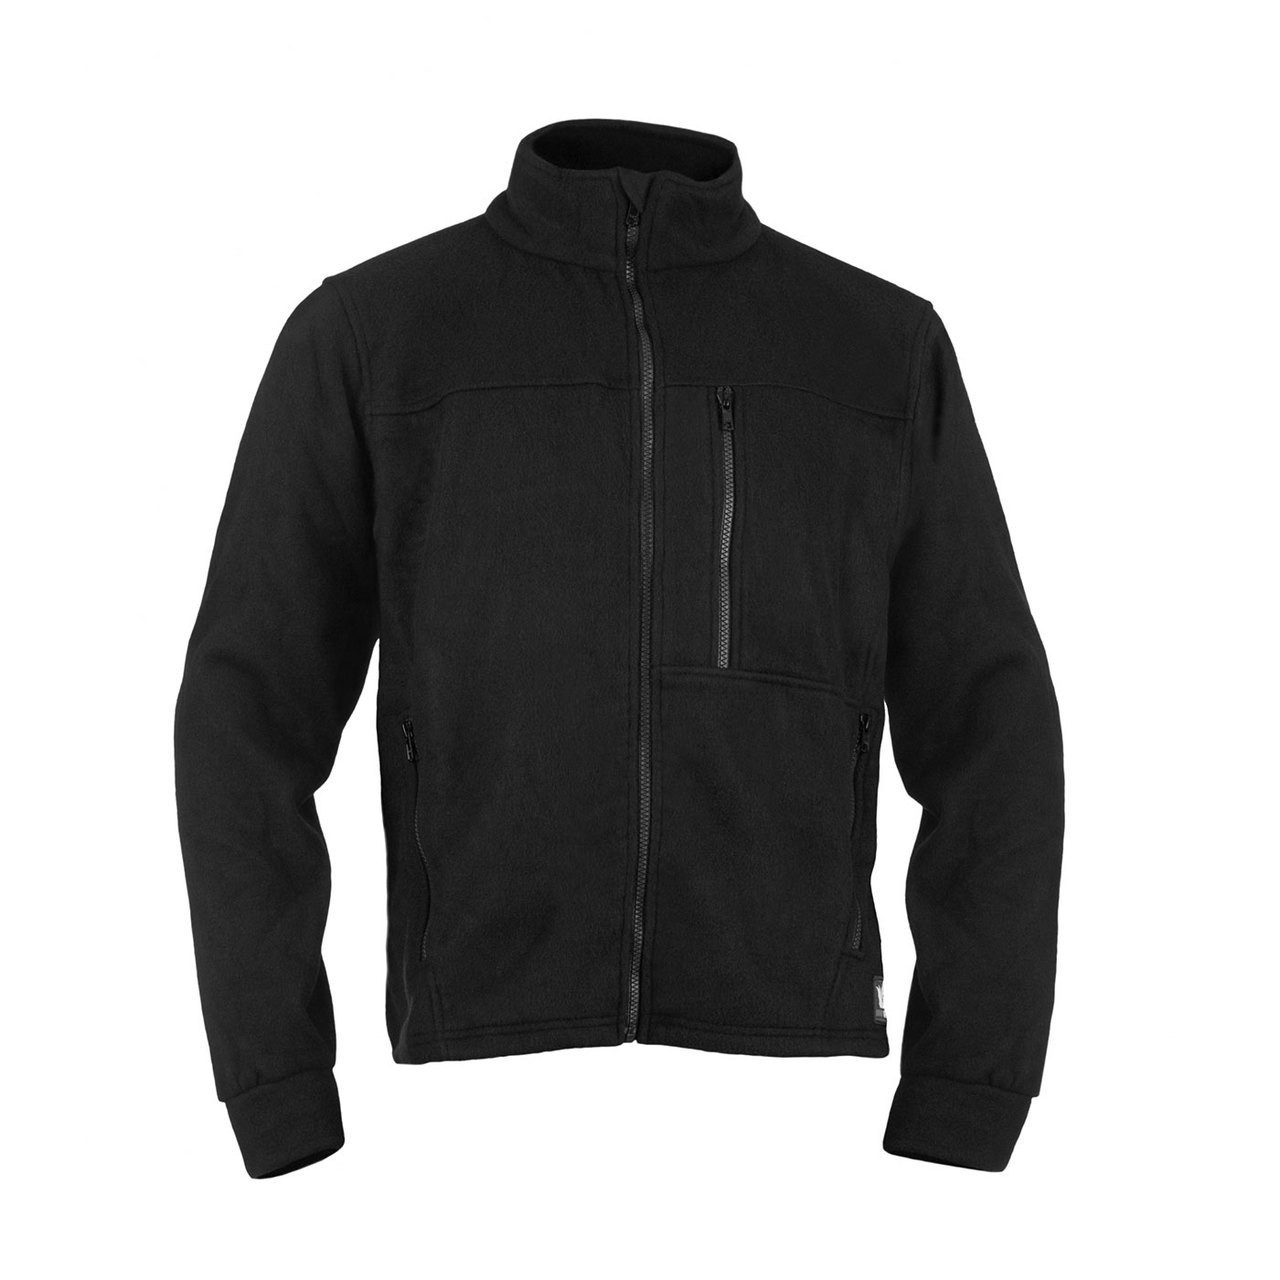 DragonWear FR ALPHA Super Fleece Black Made in USA Jacket 105210